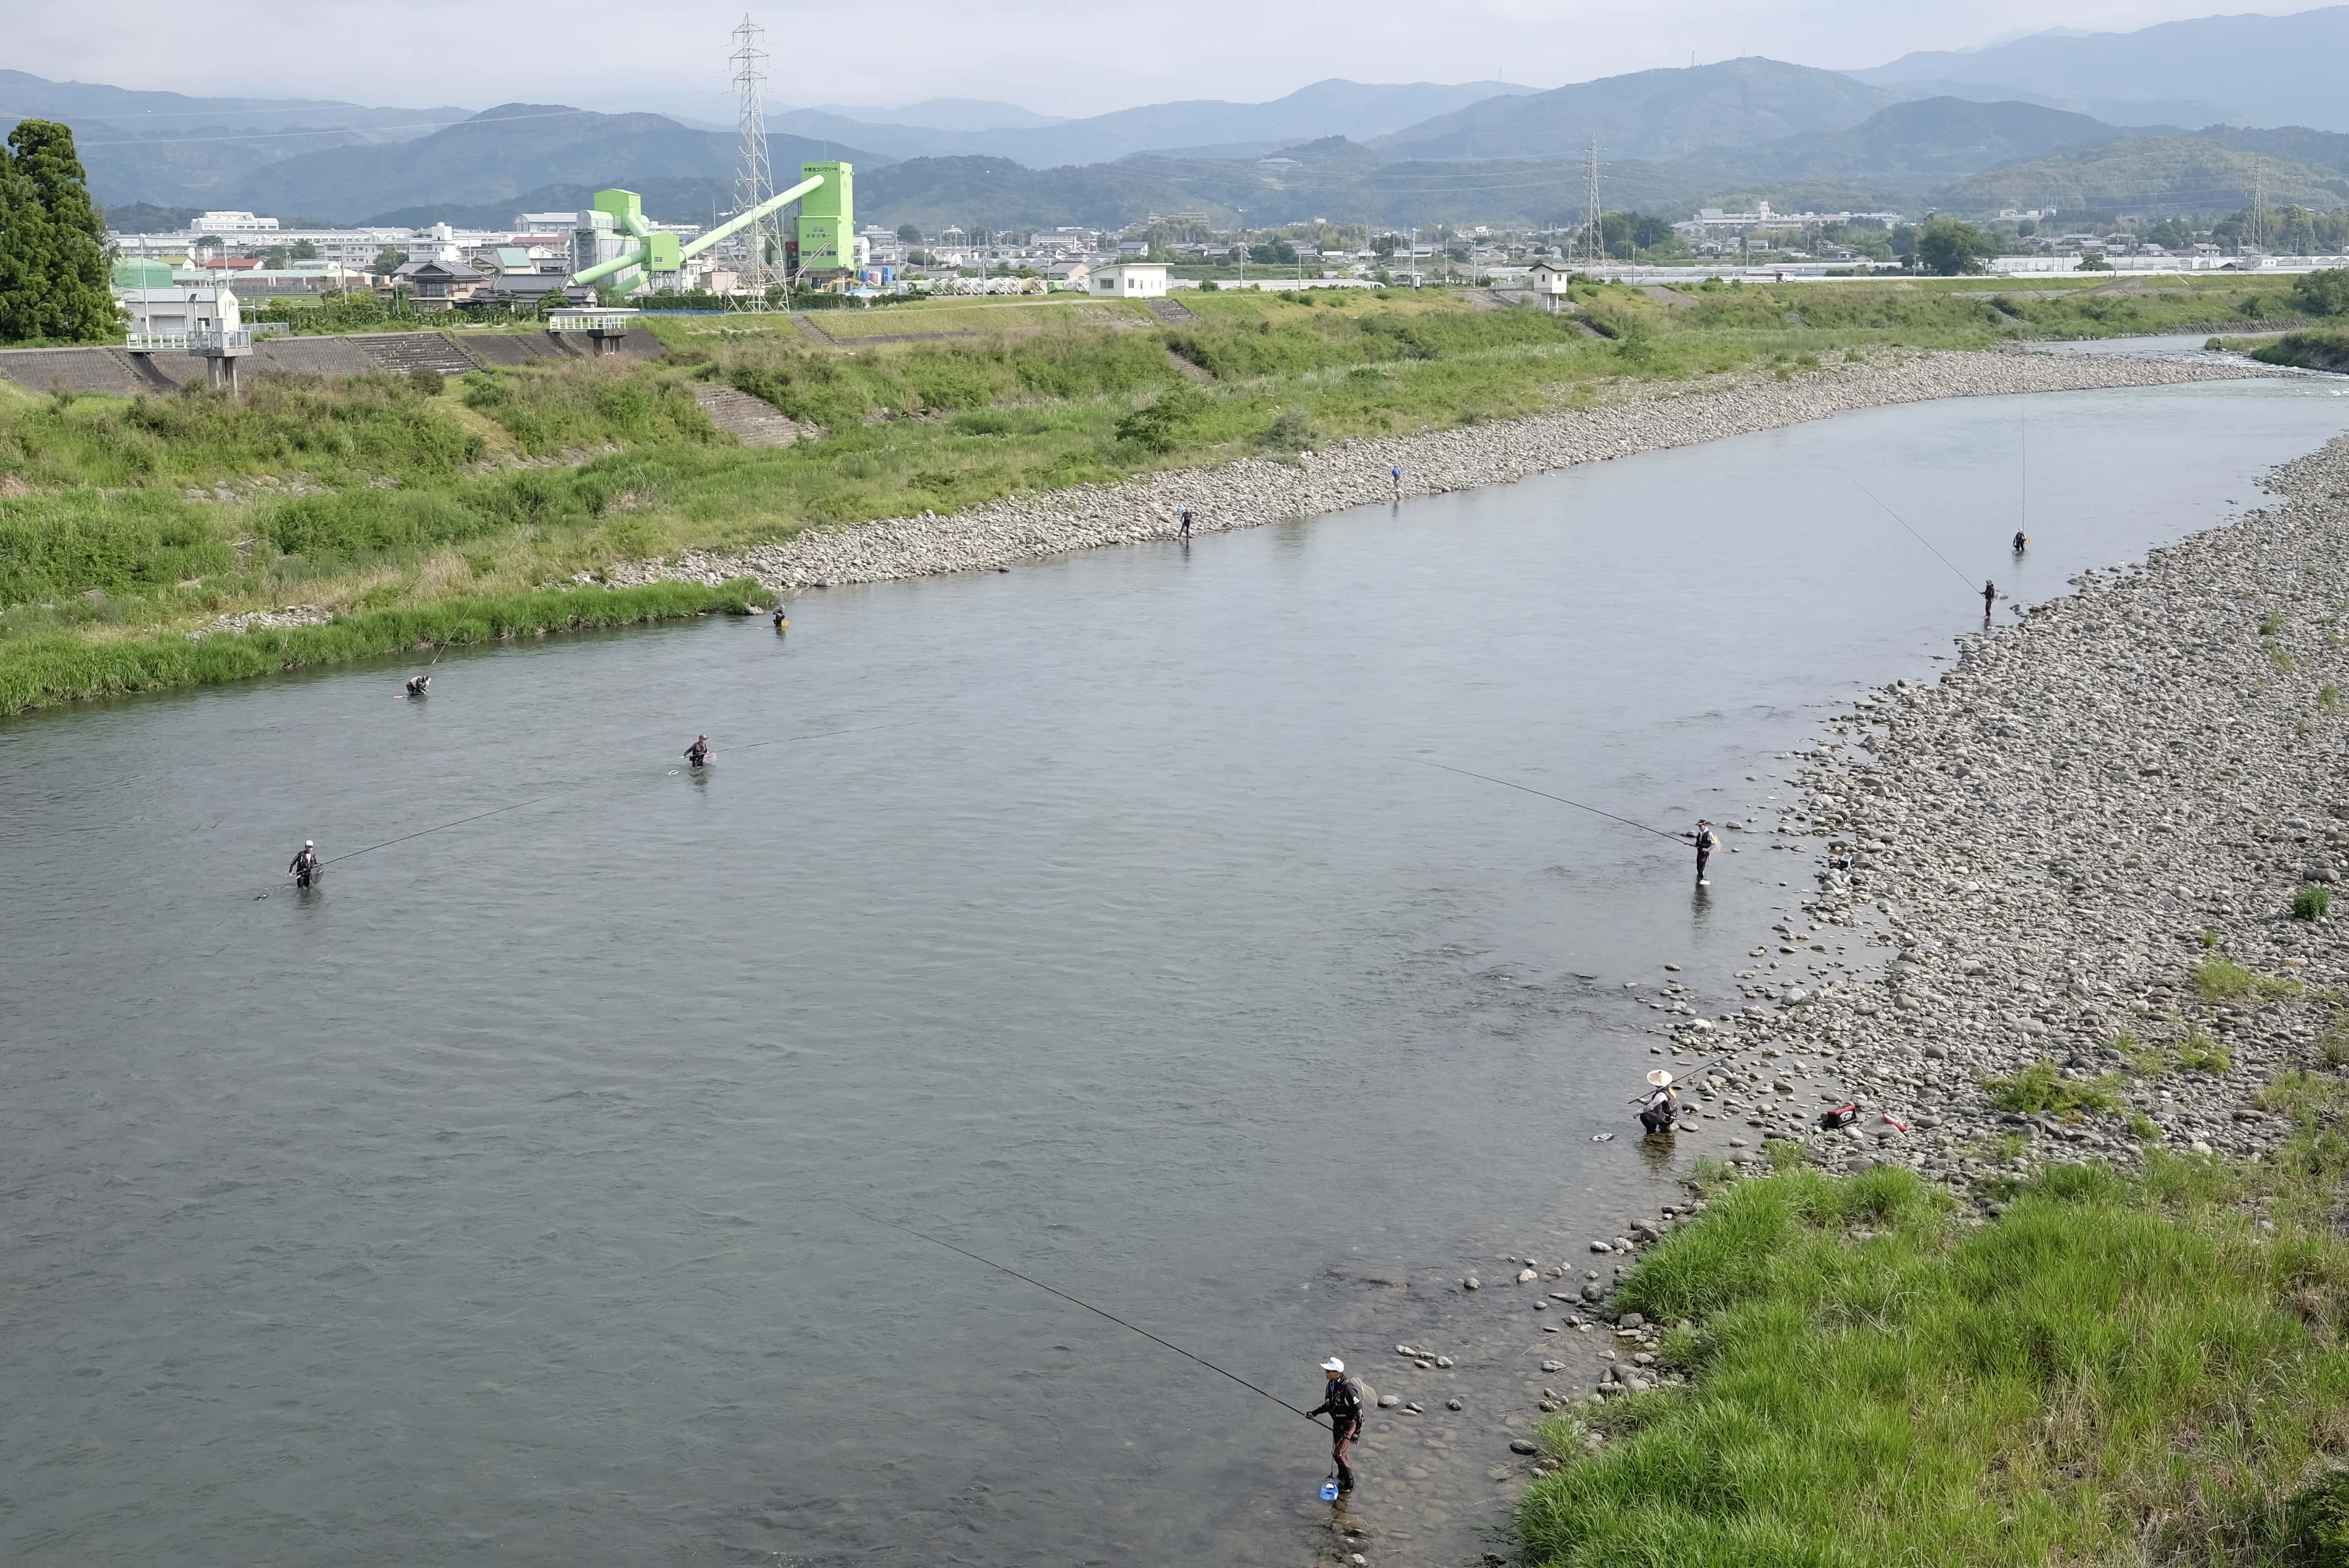 Toitajima Bashi Fishing